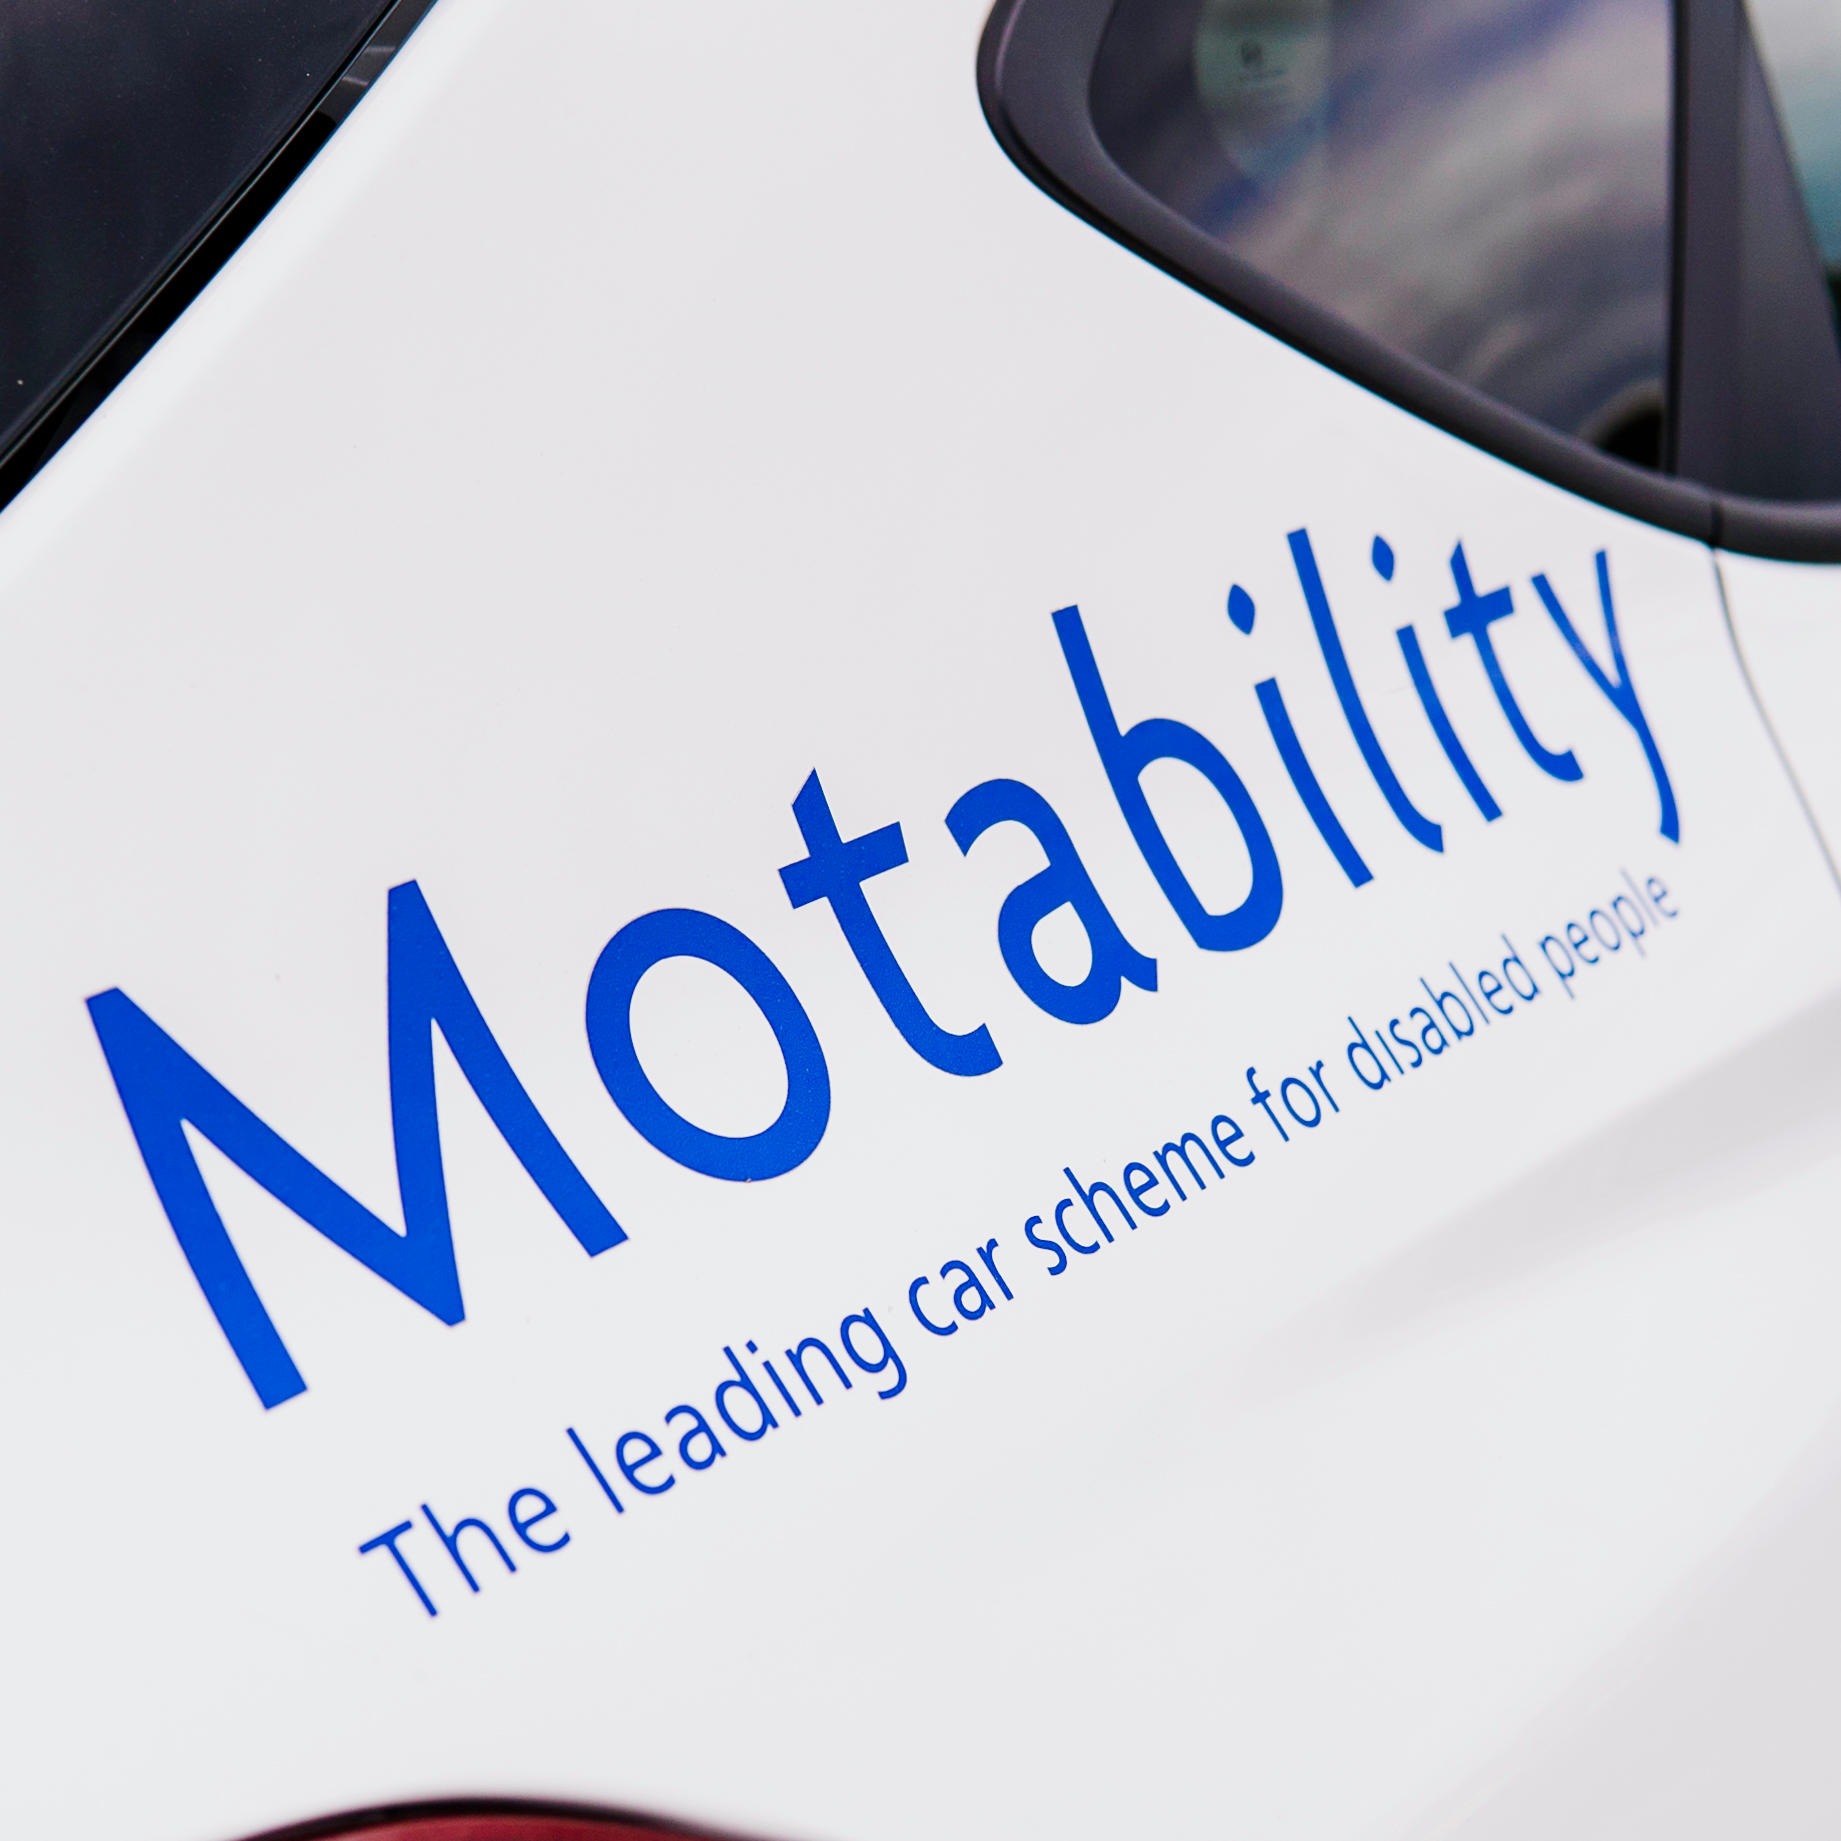 Motability Scheme at SG Petch SEAT Middlesborough